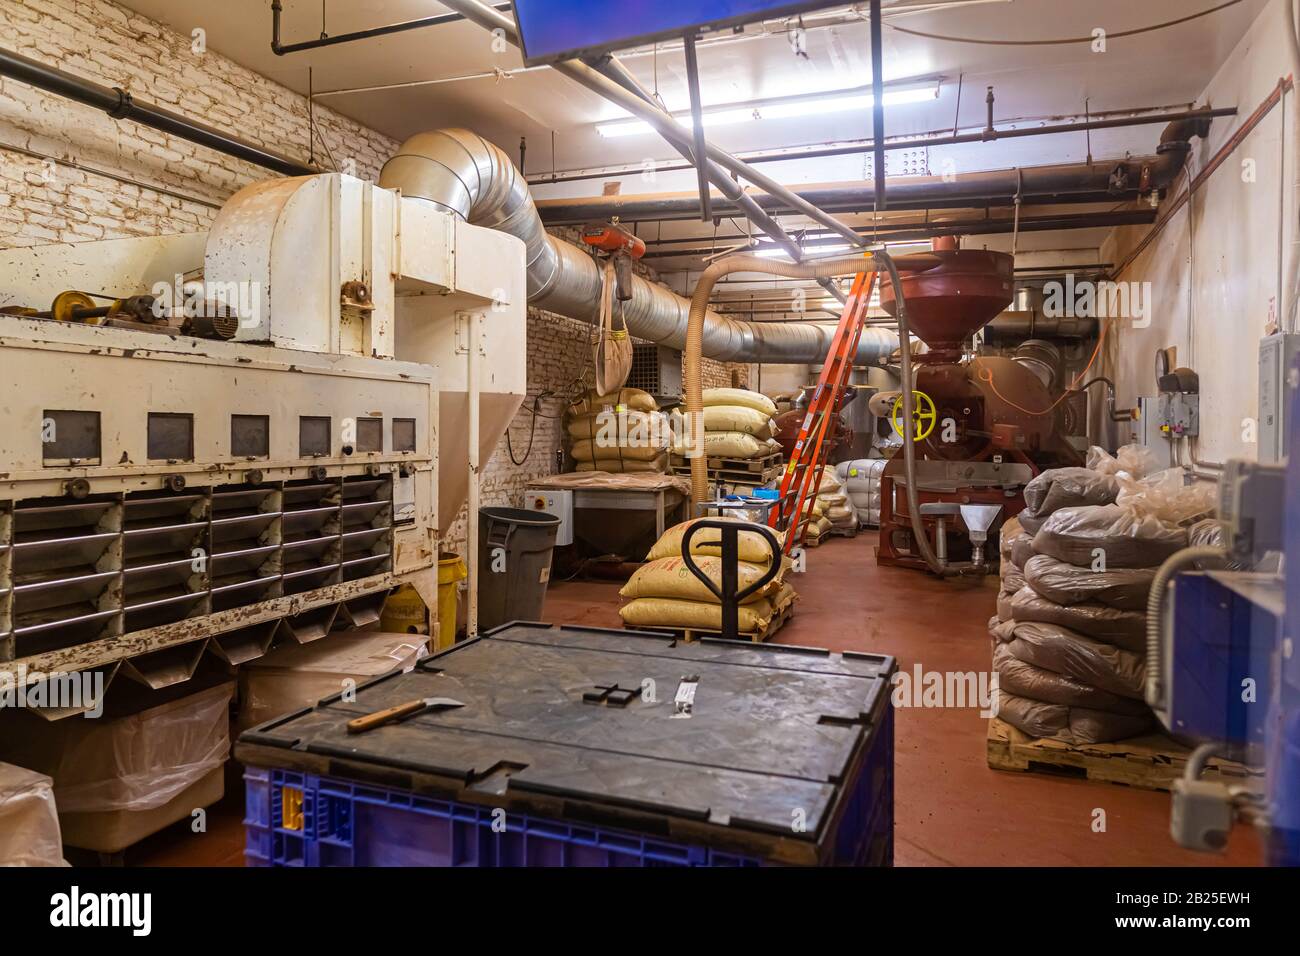 Cambridge MA USA - feb 29 2020 - Inside of a chocolate factory Stock Photo